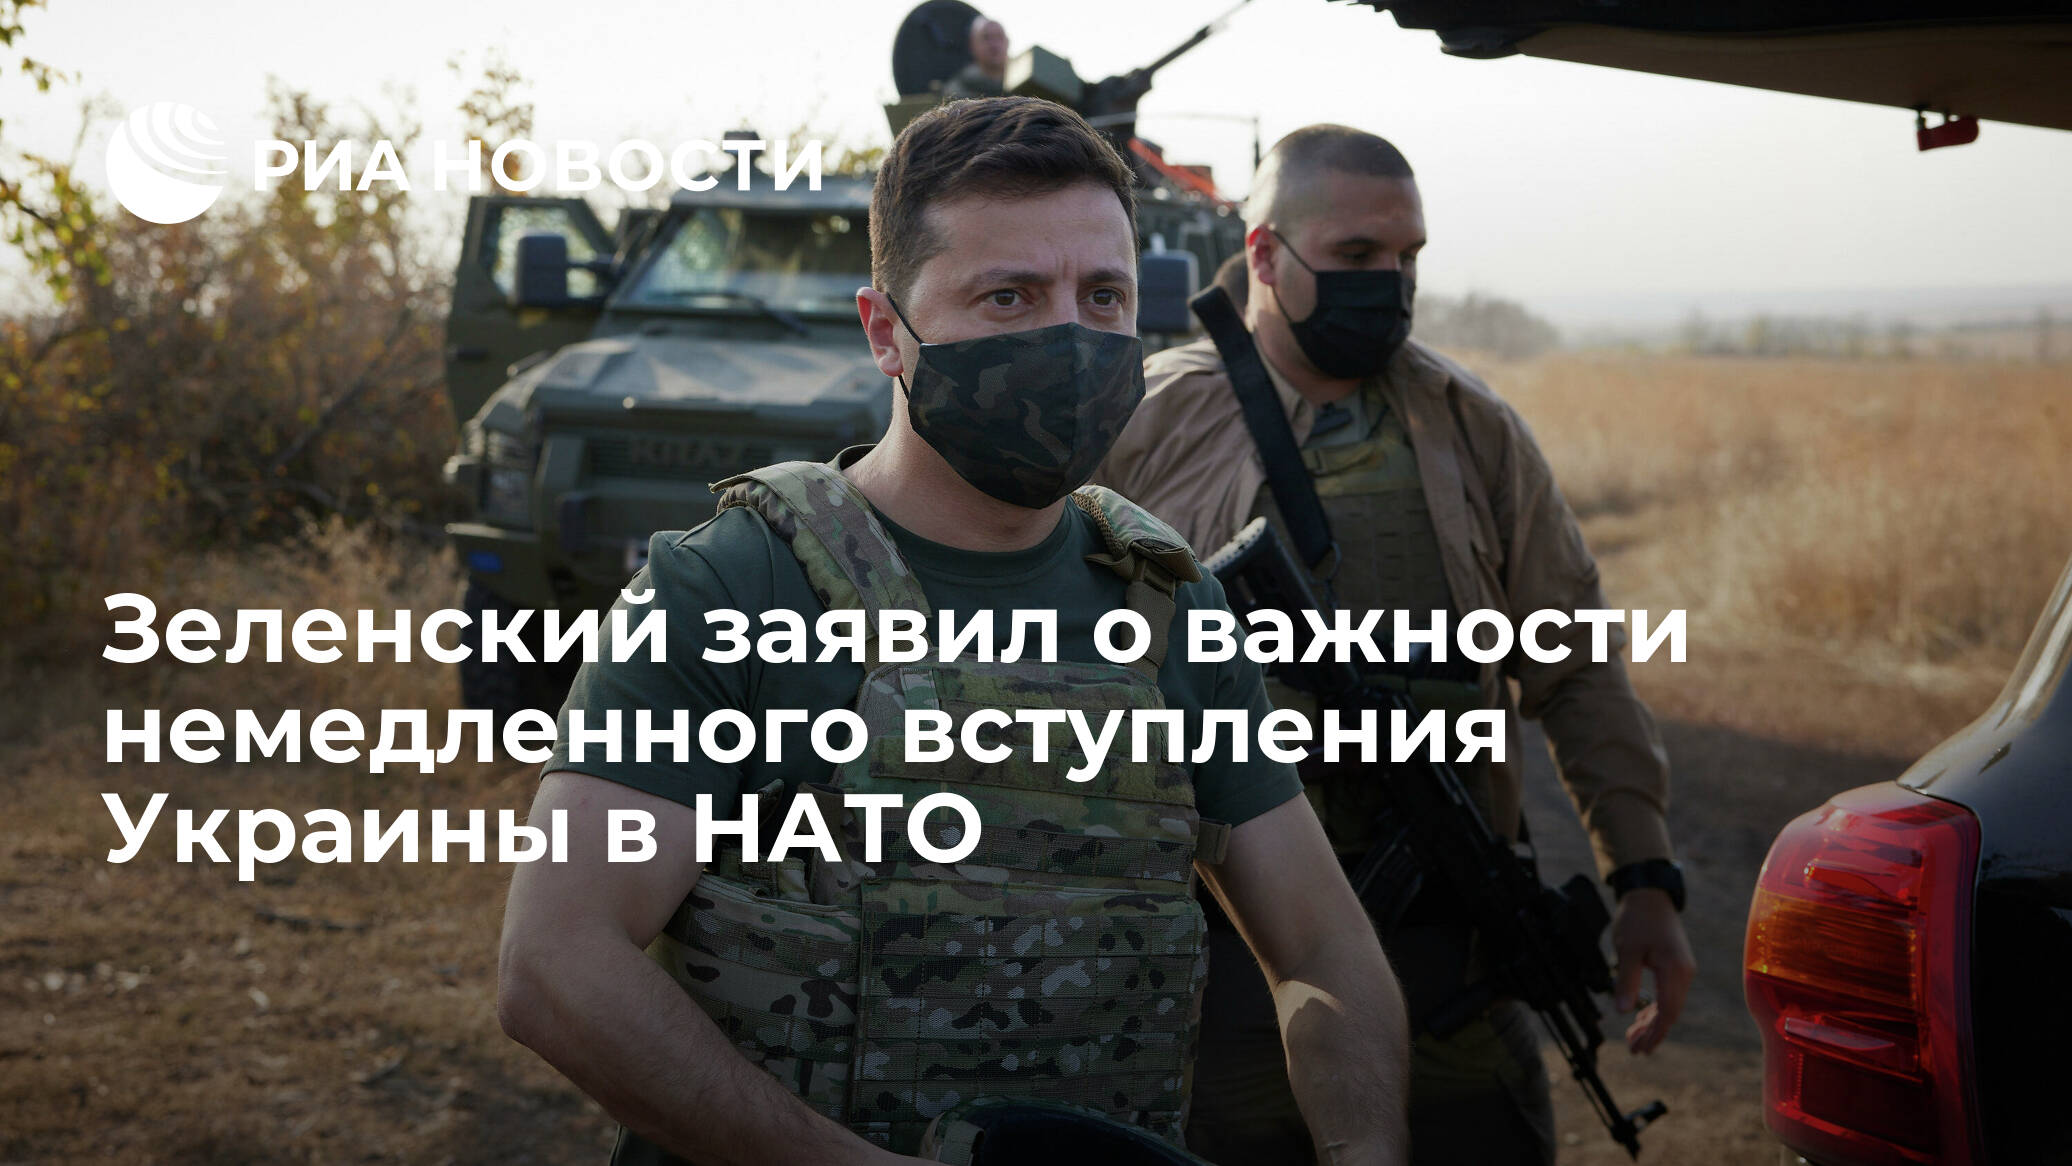 Zelensky said the importance of Ukraine’s immediate accession to NATO